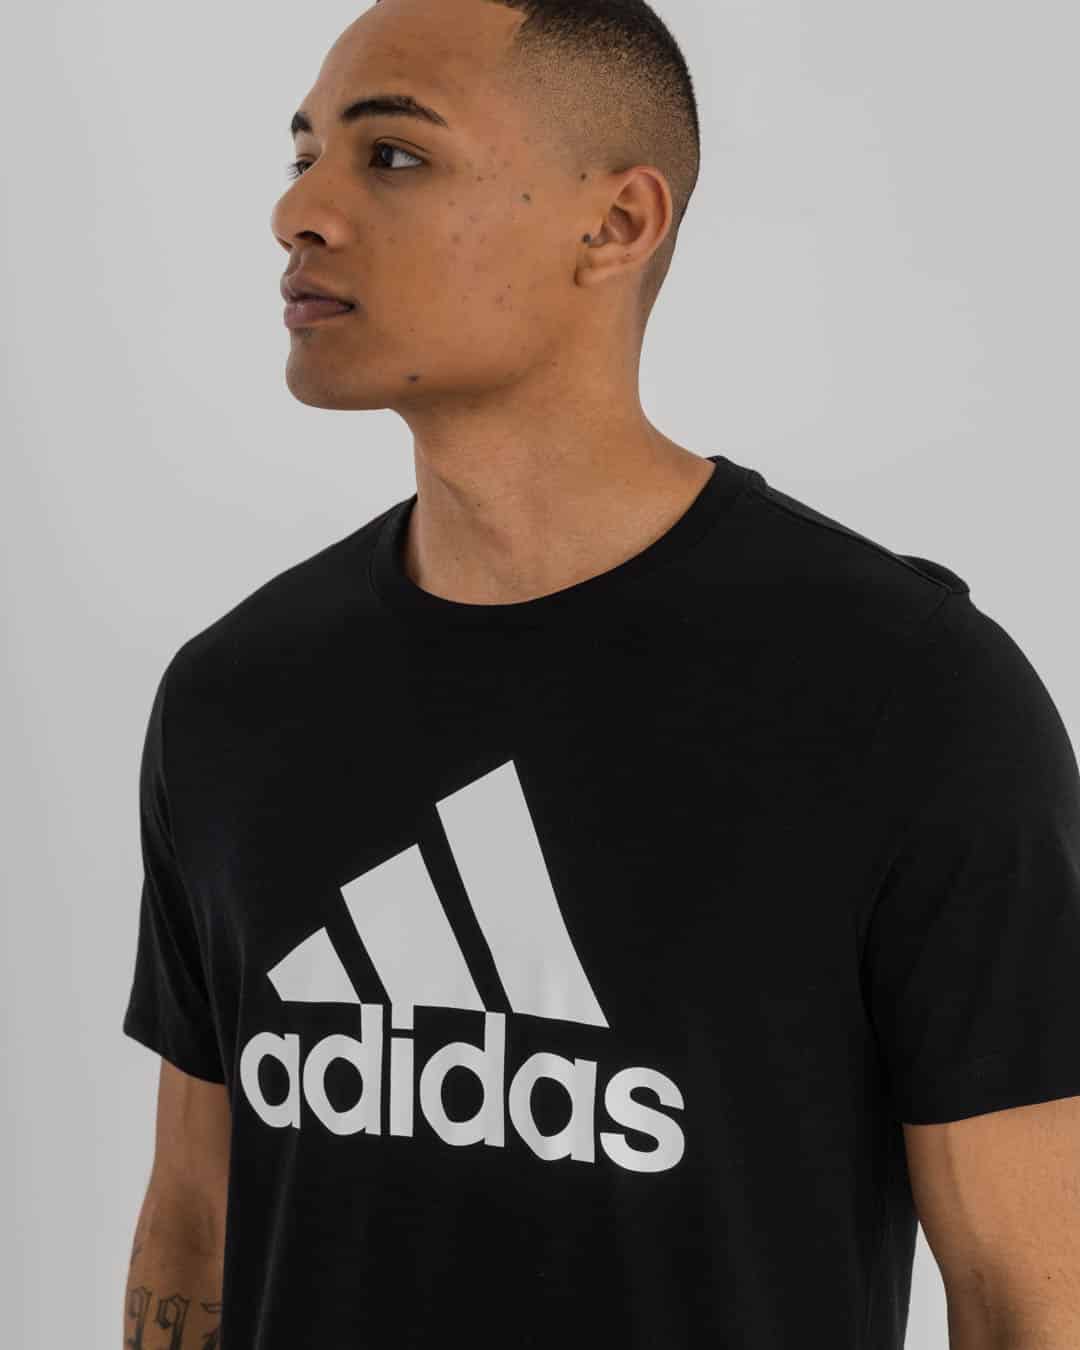 midshot man wearing black Adidas t-shirt Adidas logo on chest